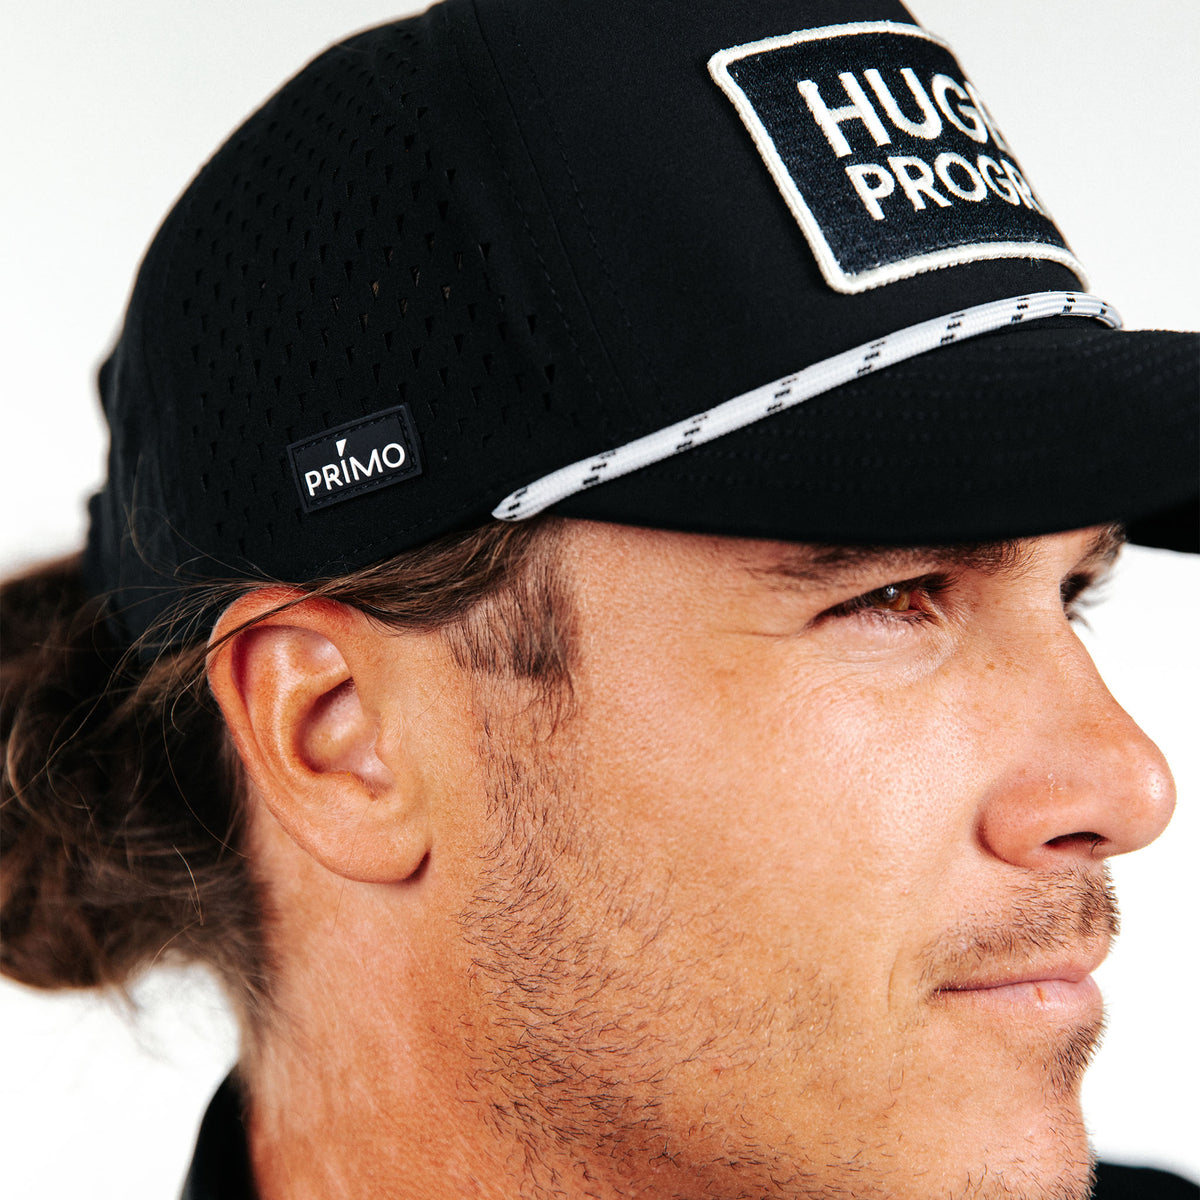 Primo Hats – Primo Golf Apparel